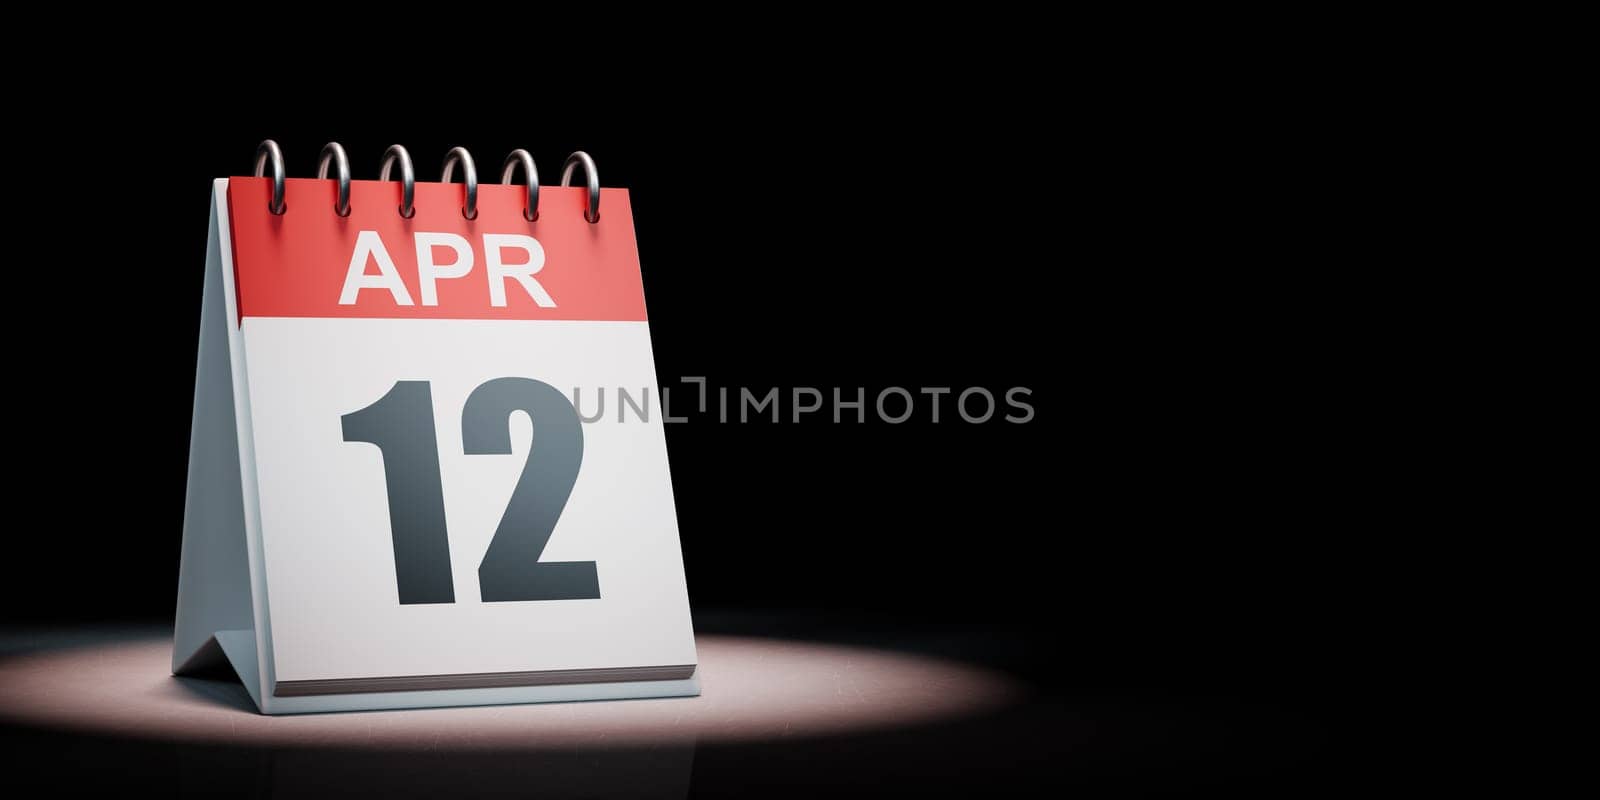 April 12 Calendar Spotlighted on Black Background by make